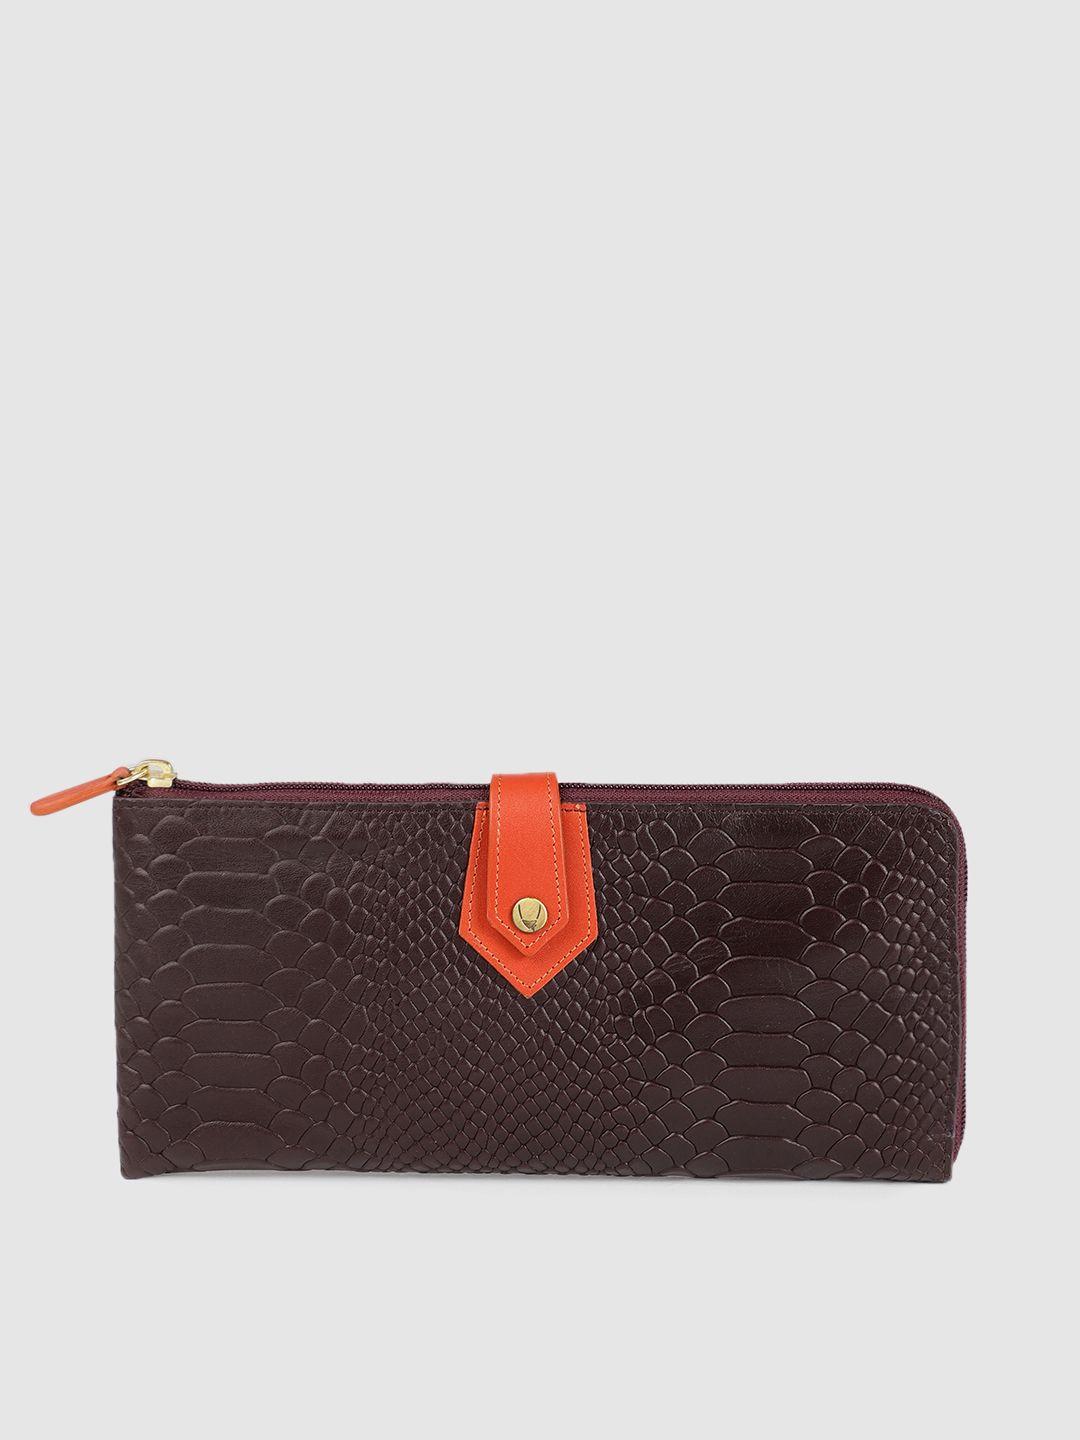 hidesign women purple animal textured zip around wallet